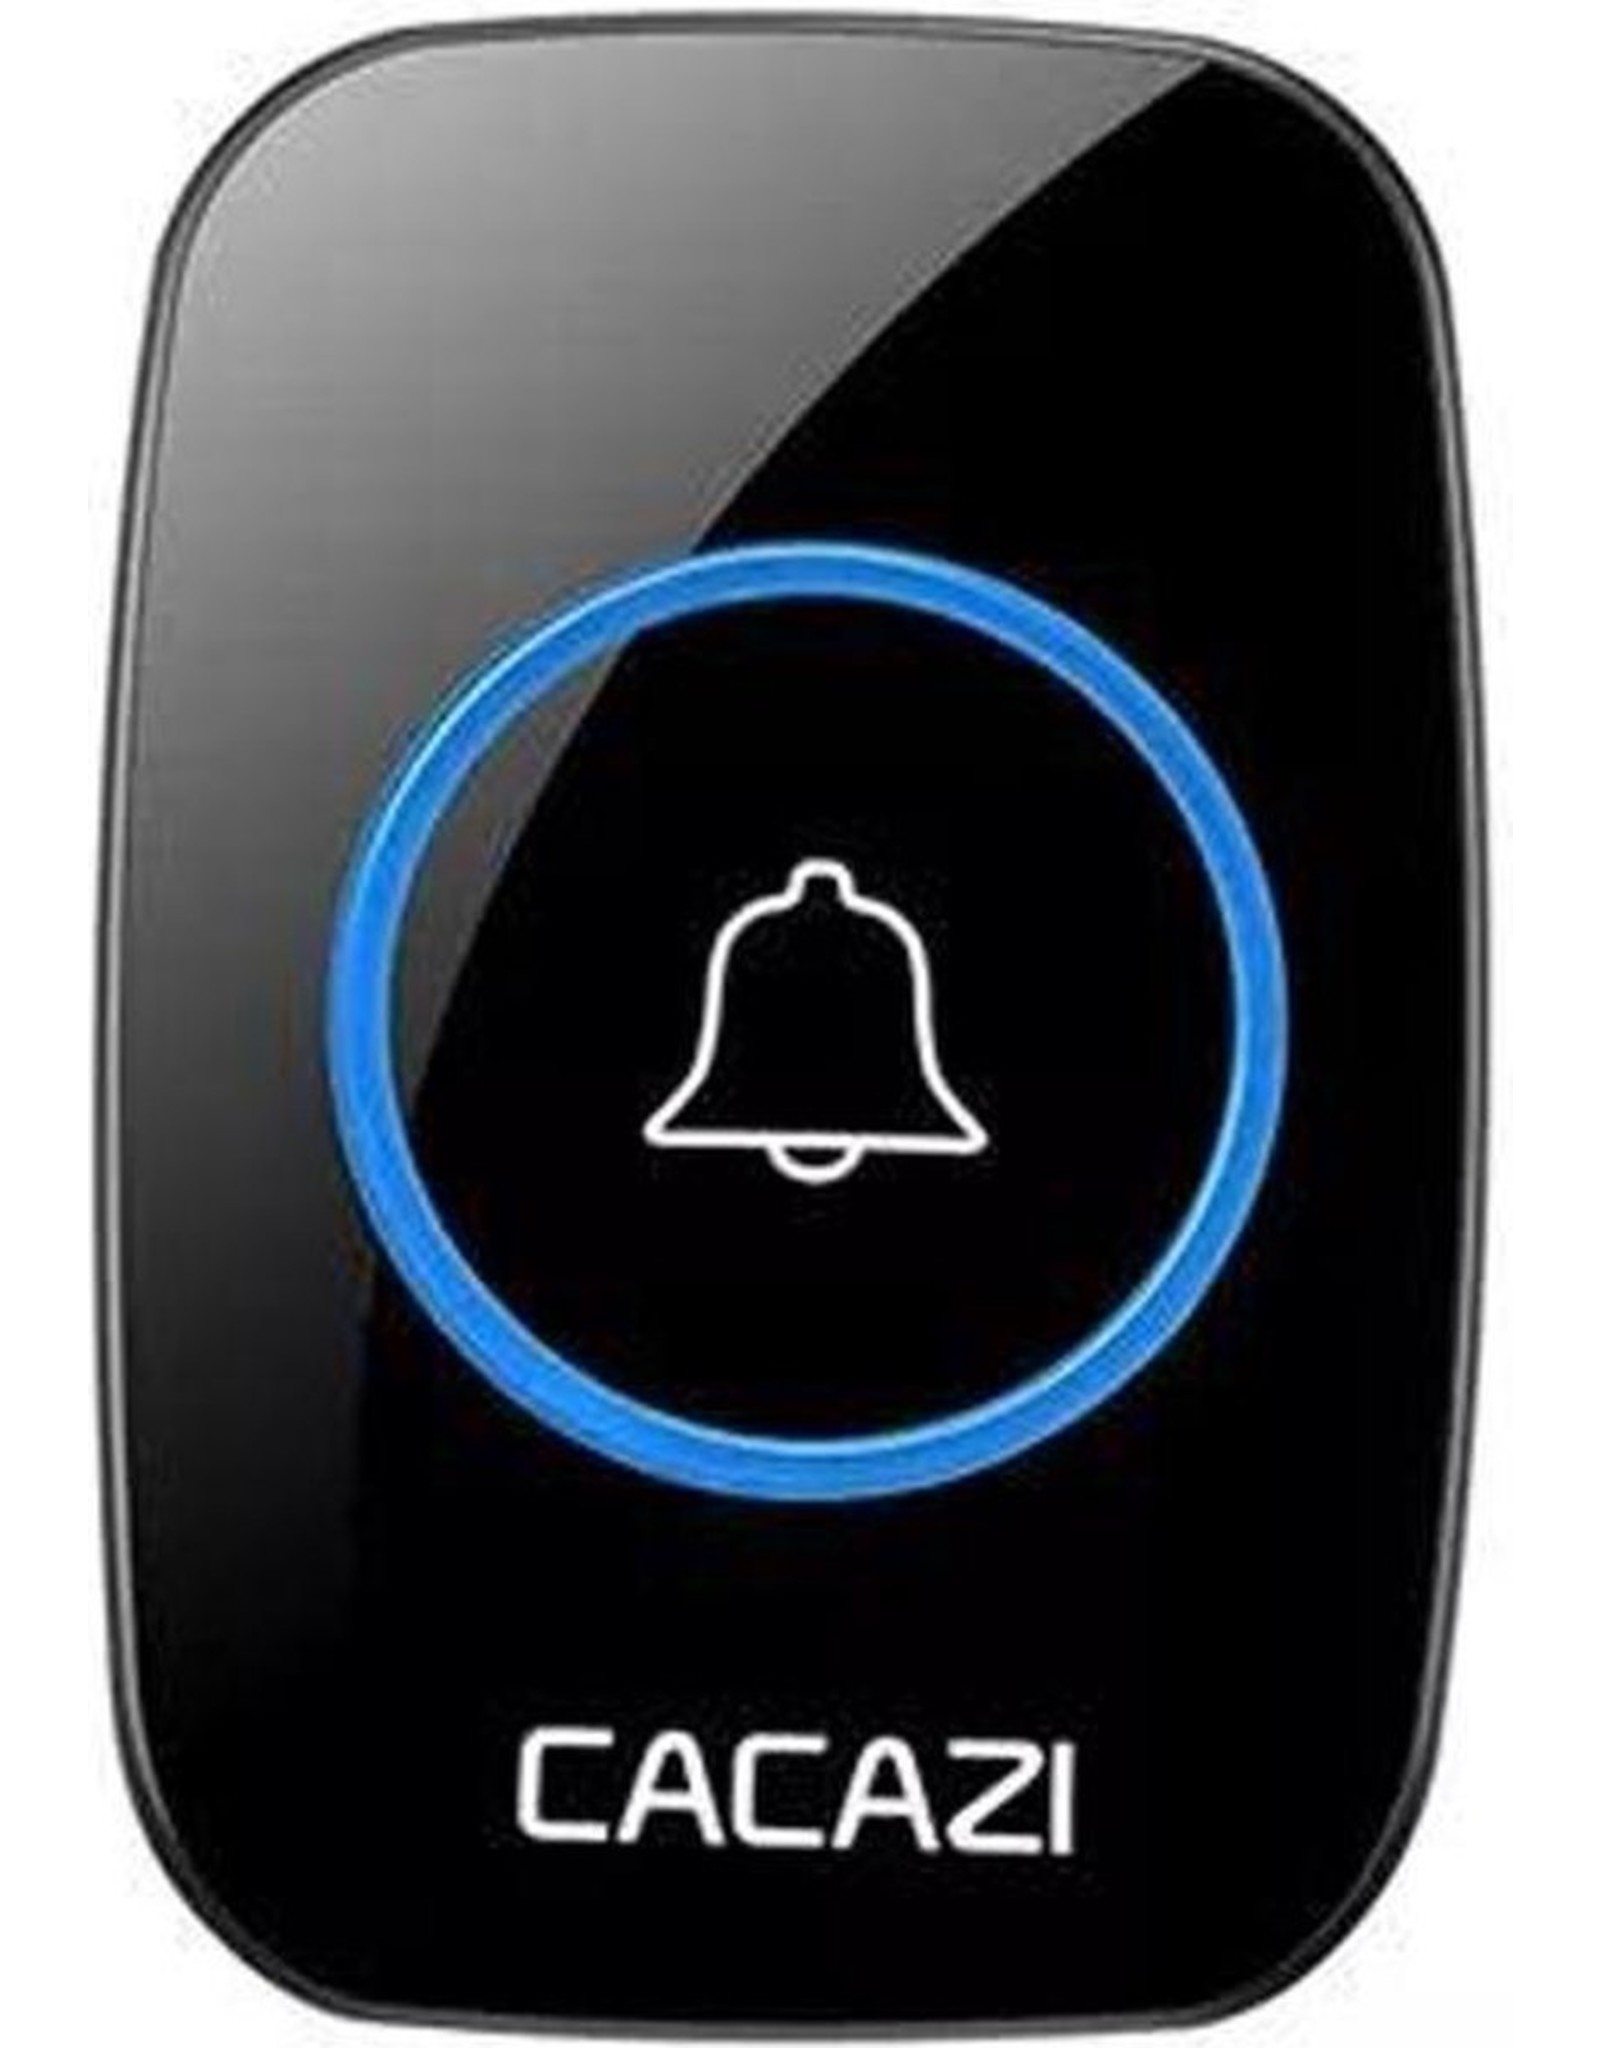 Cacazi - Wireless doorbell - 60 melodies - Volume adjustable